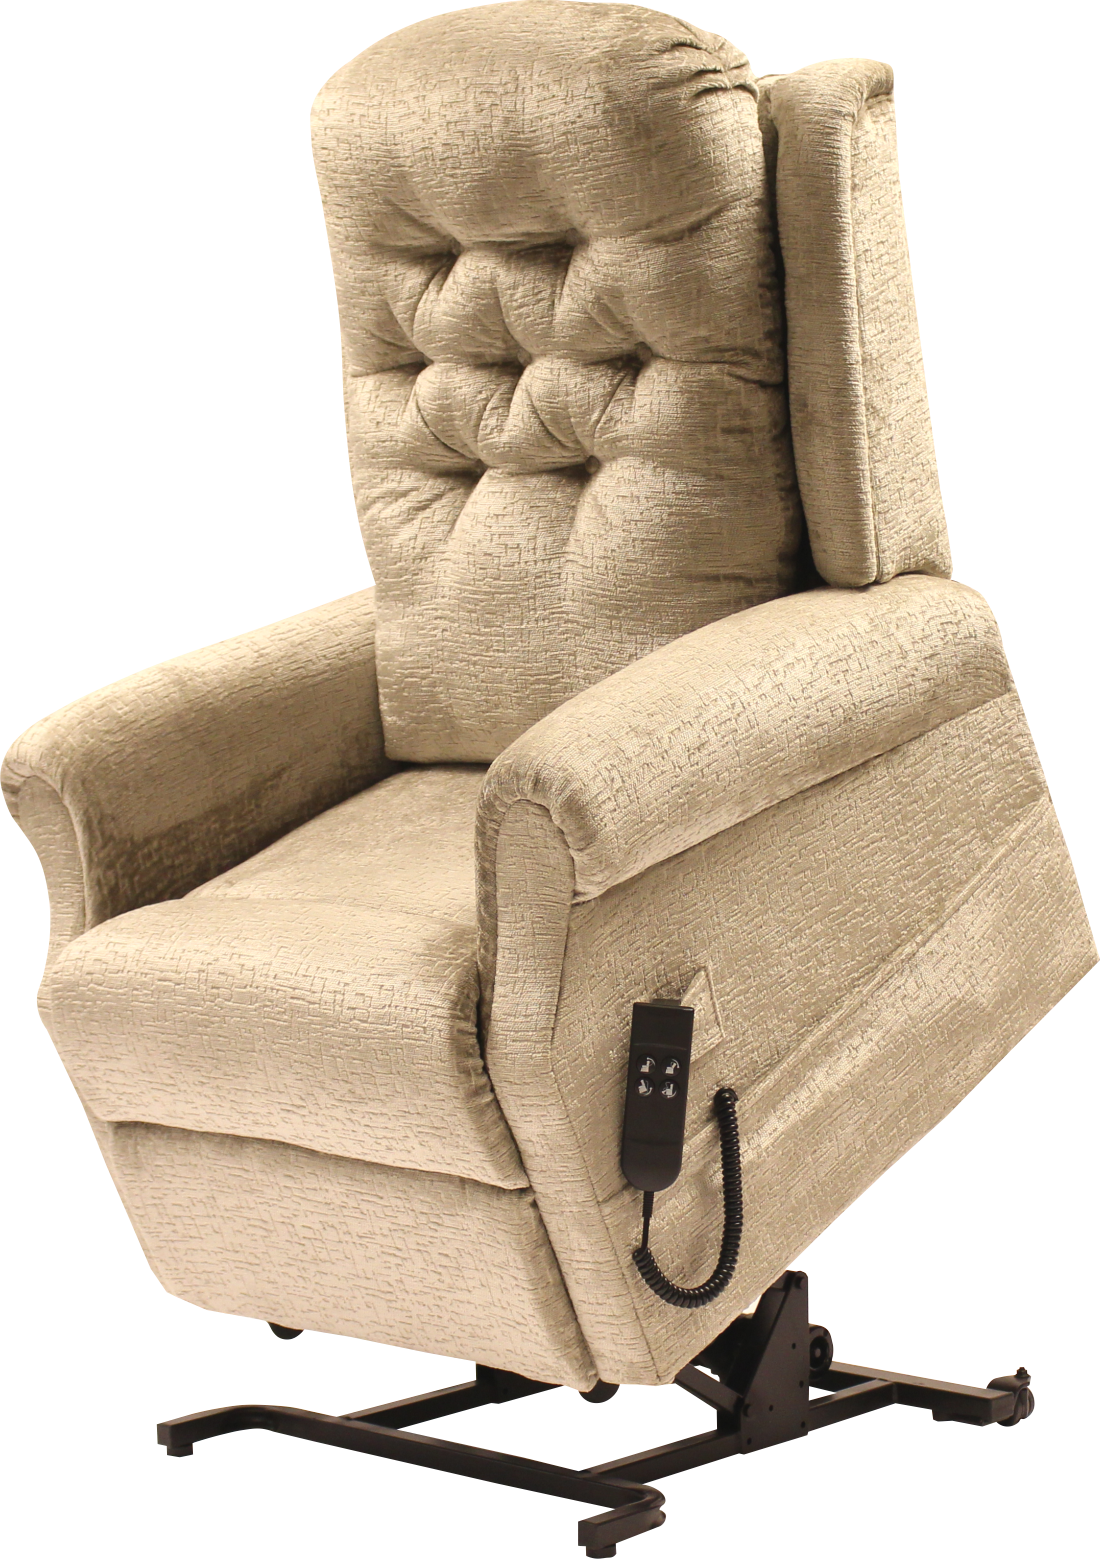 Buckholm Upholstered Lift & Rise Recliner Arm Chair Grande